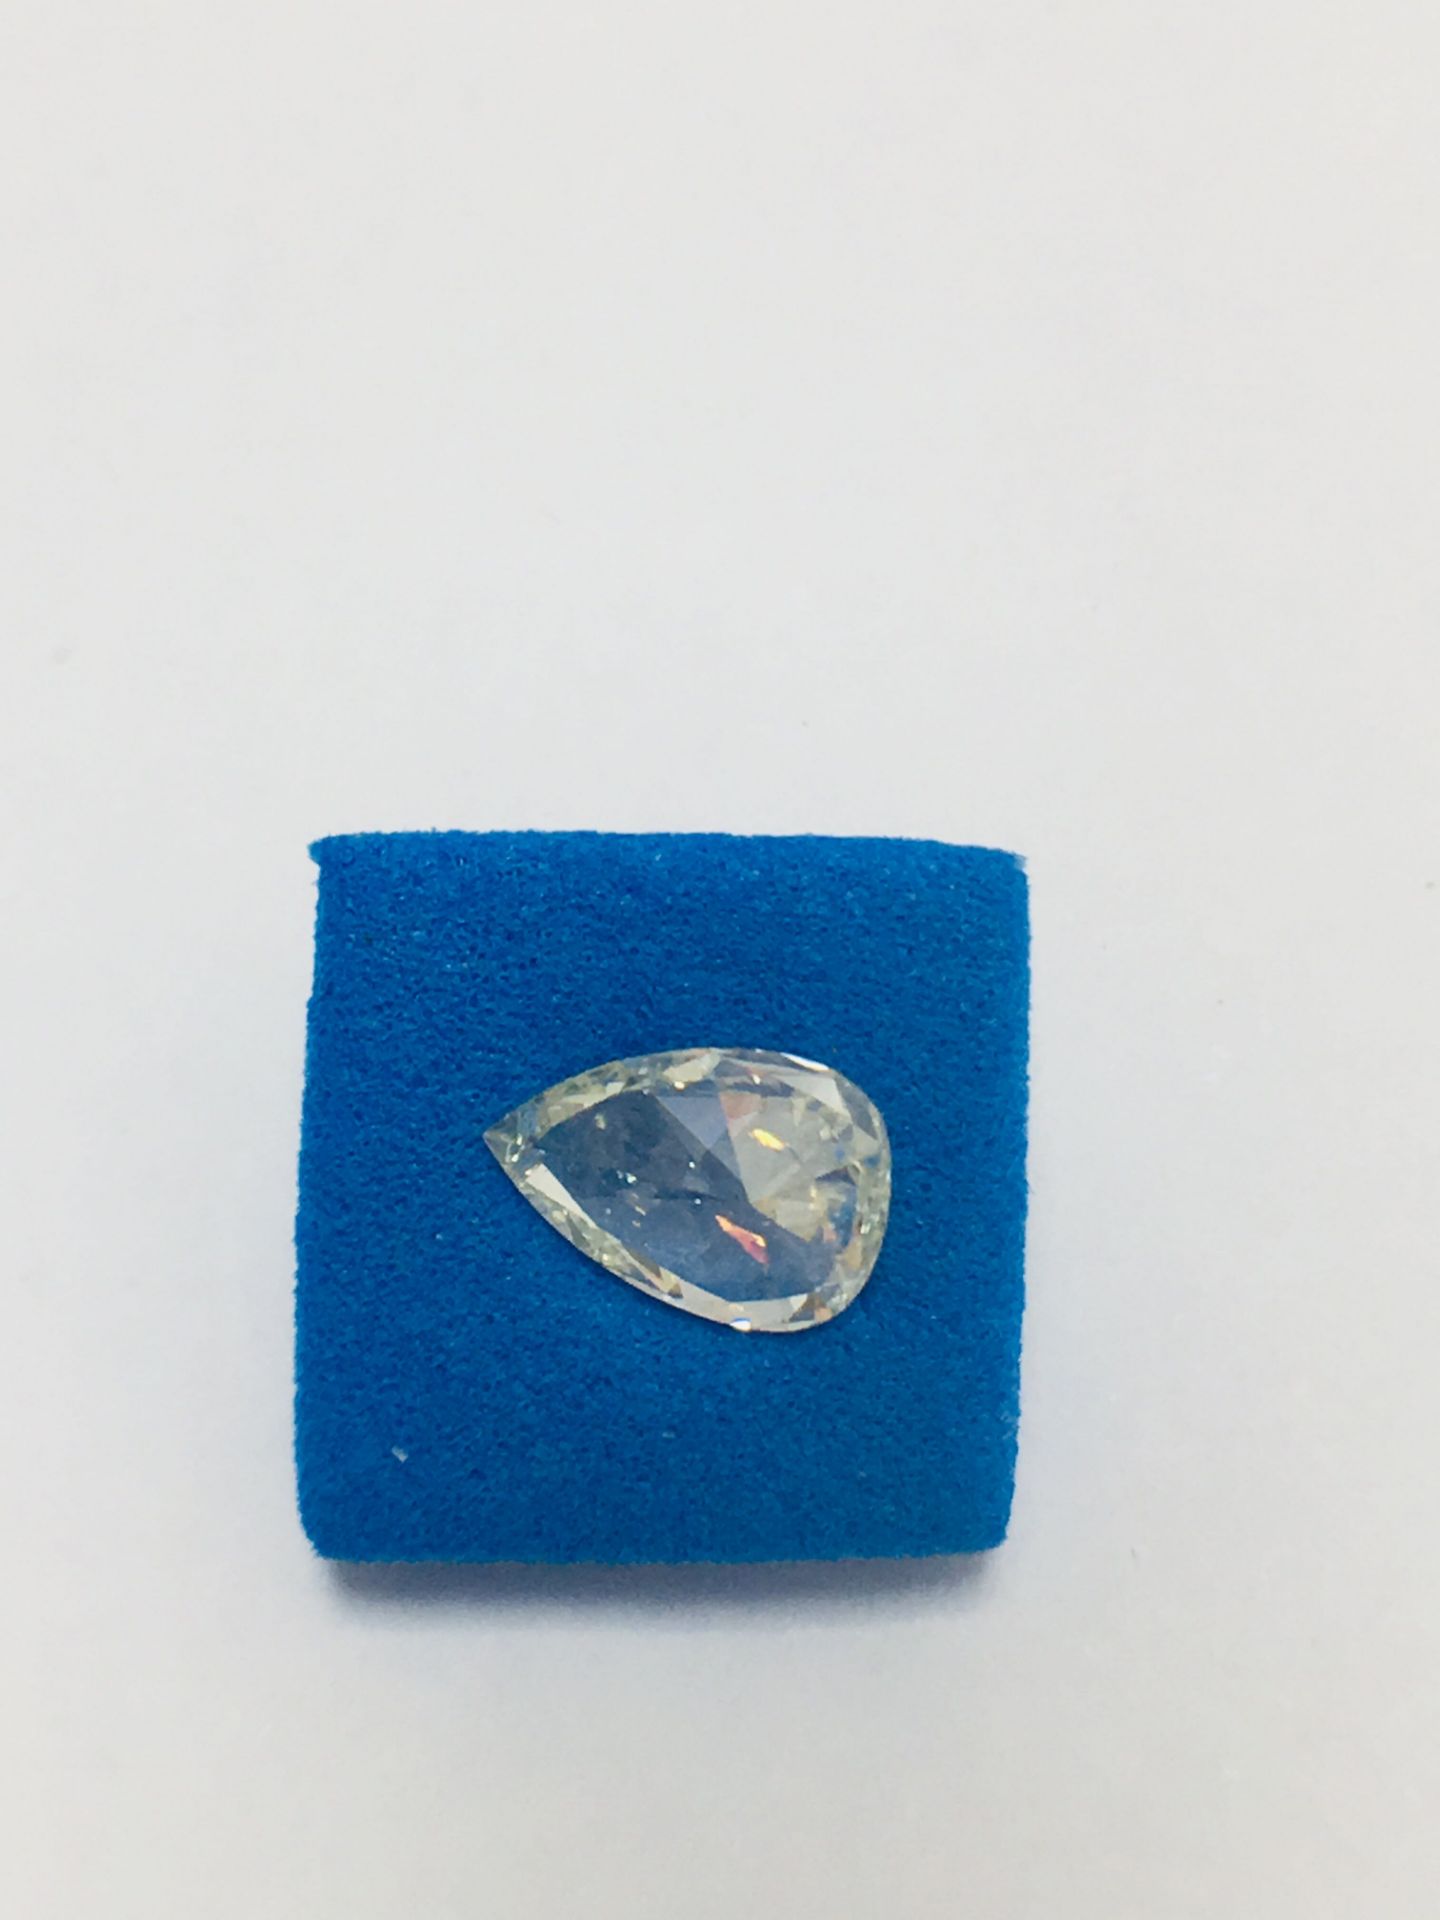 0.93Ct Pearshape Natural Diamond - Image 2 of 3